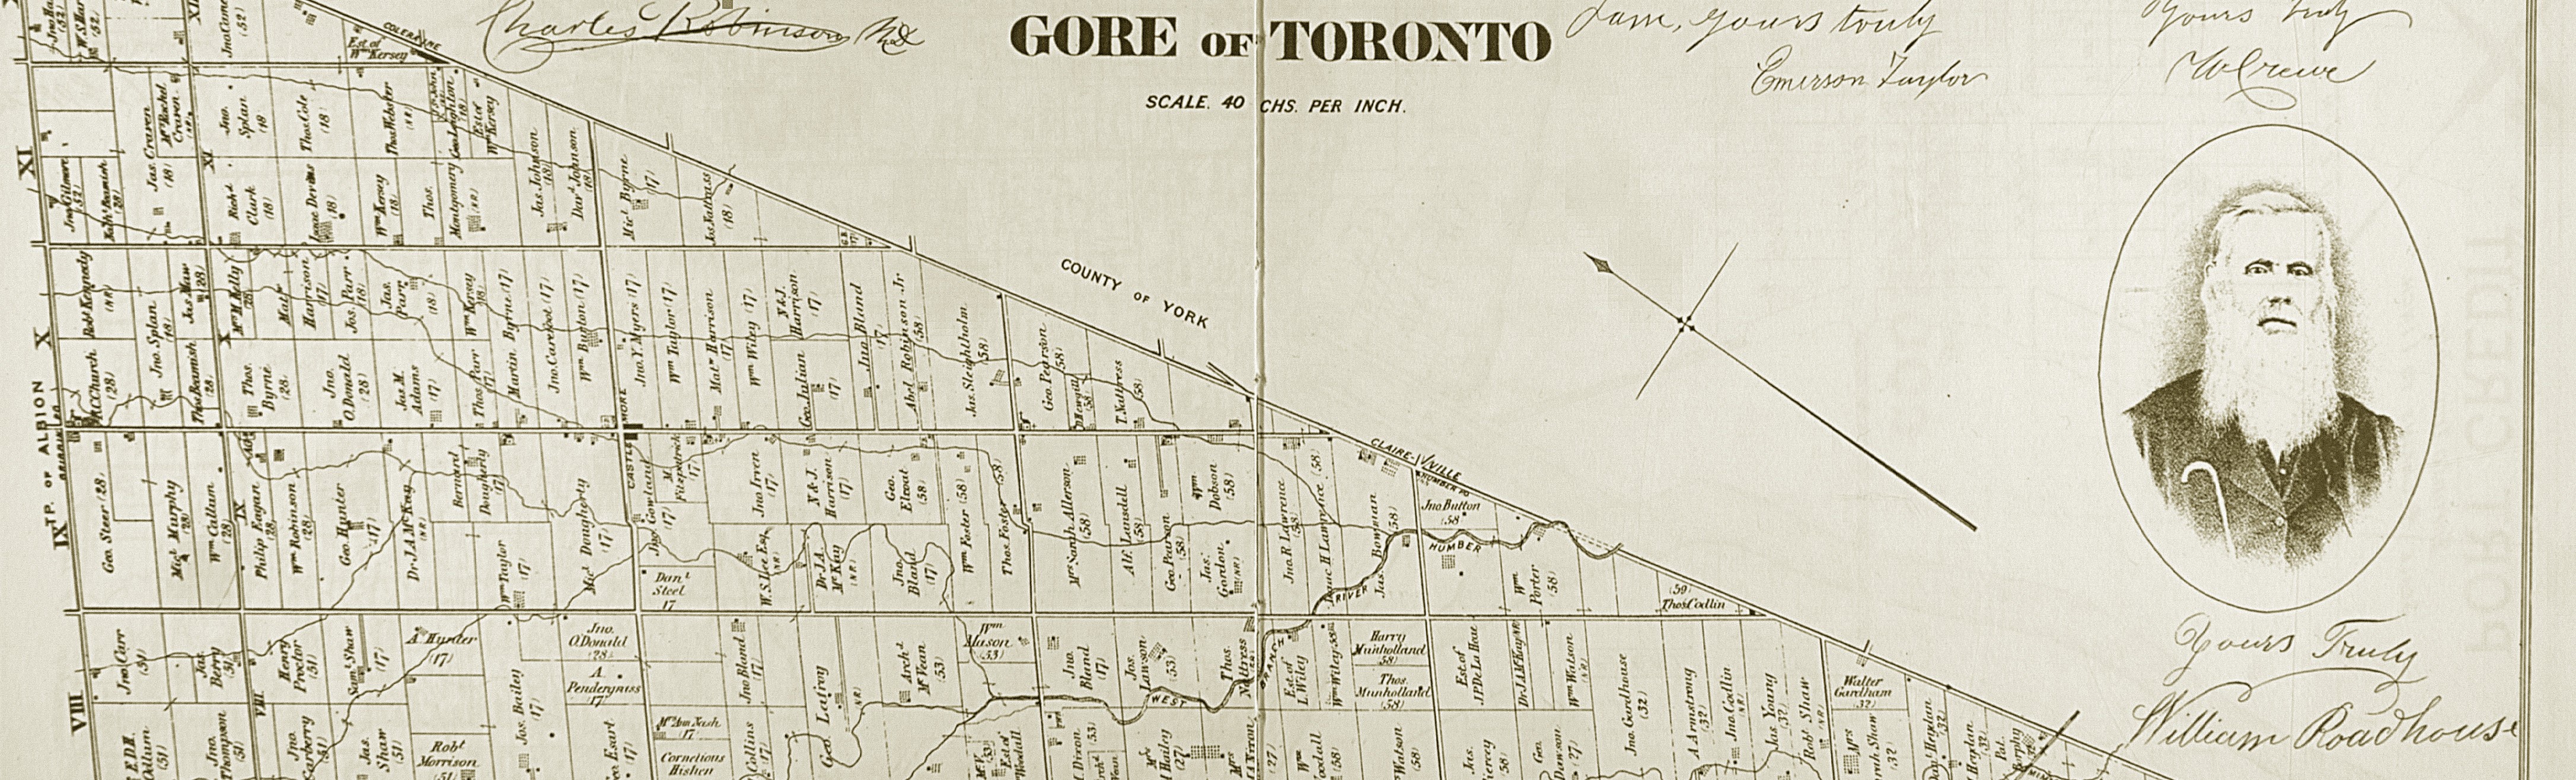 Map of Toronto-Gore